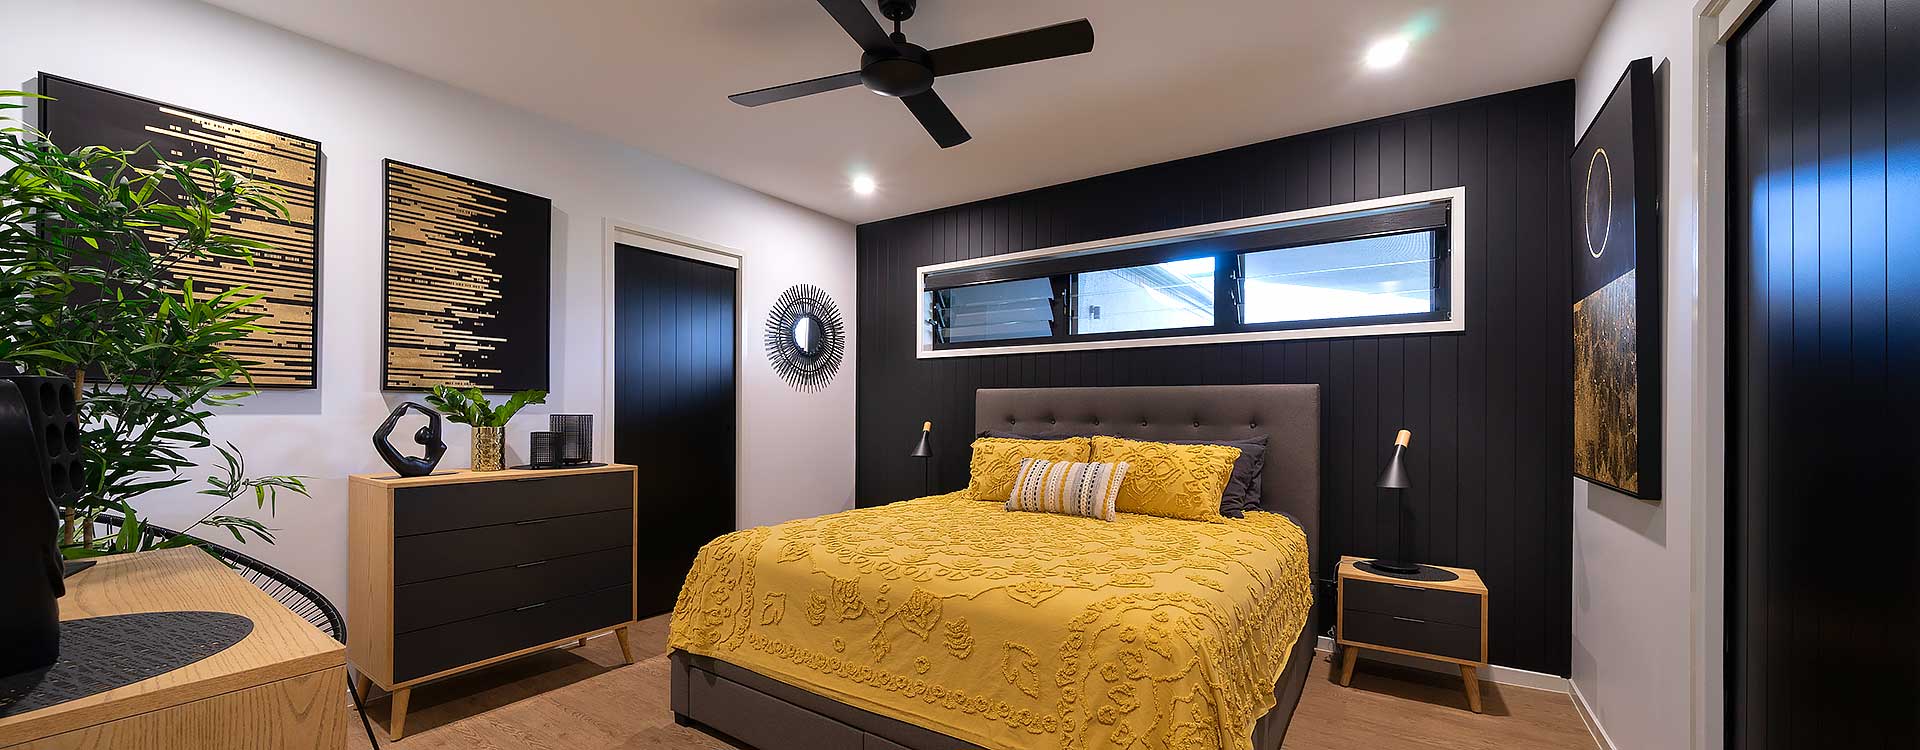 modern new home bedroom